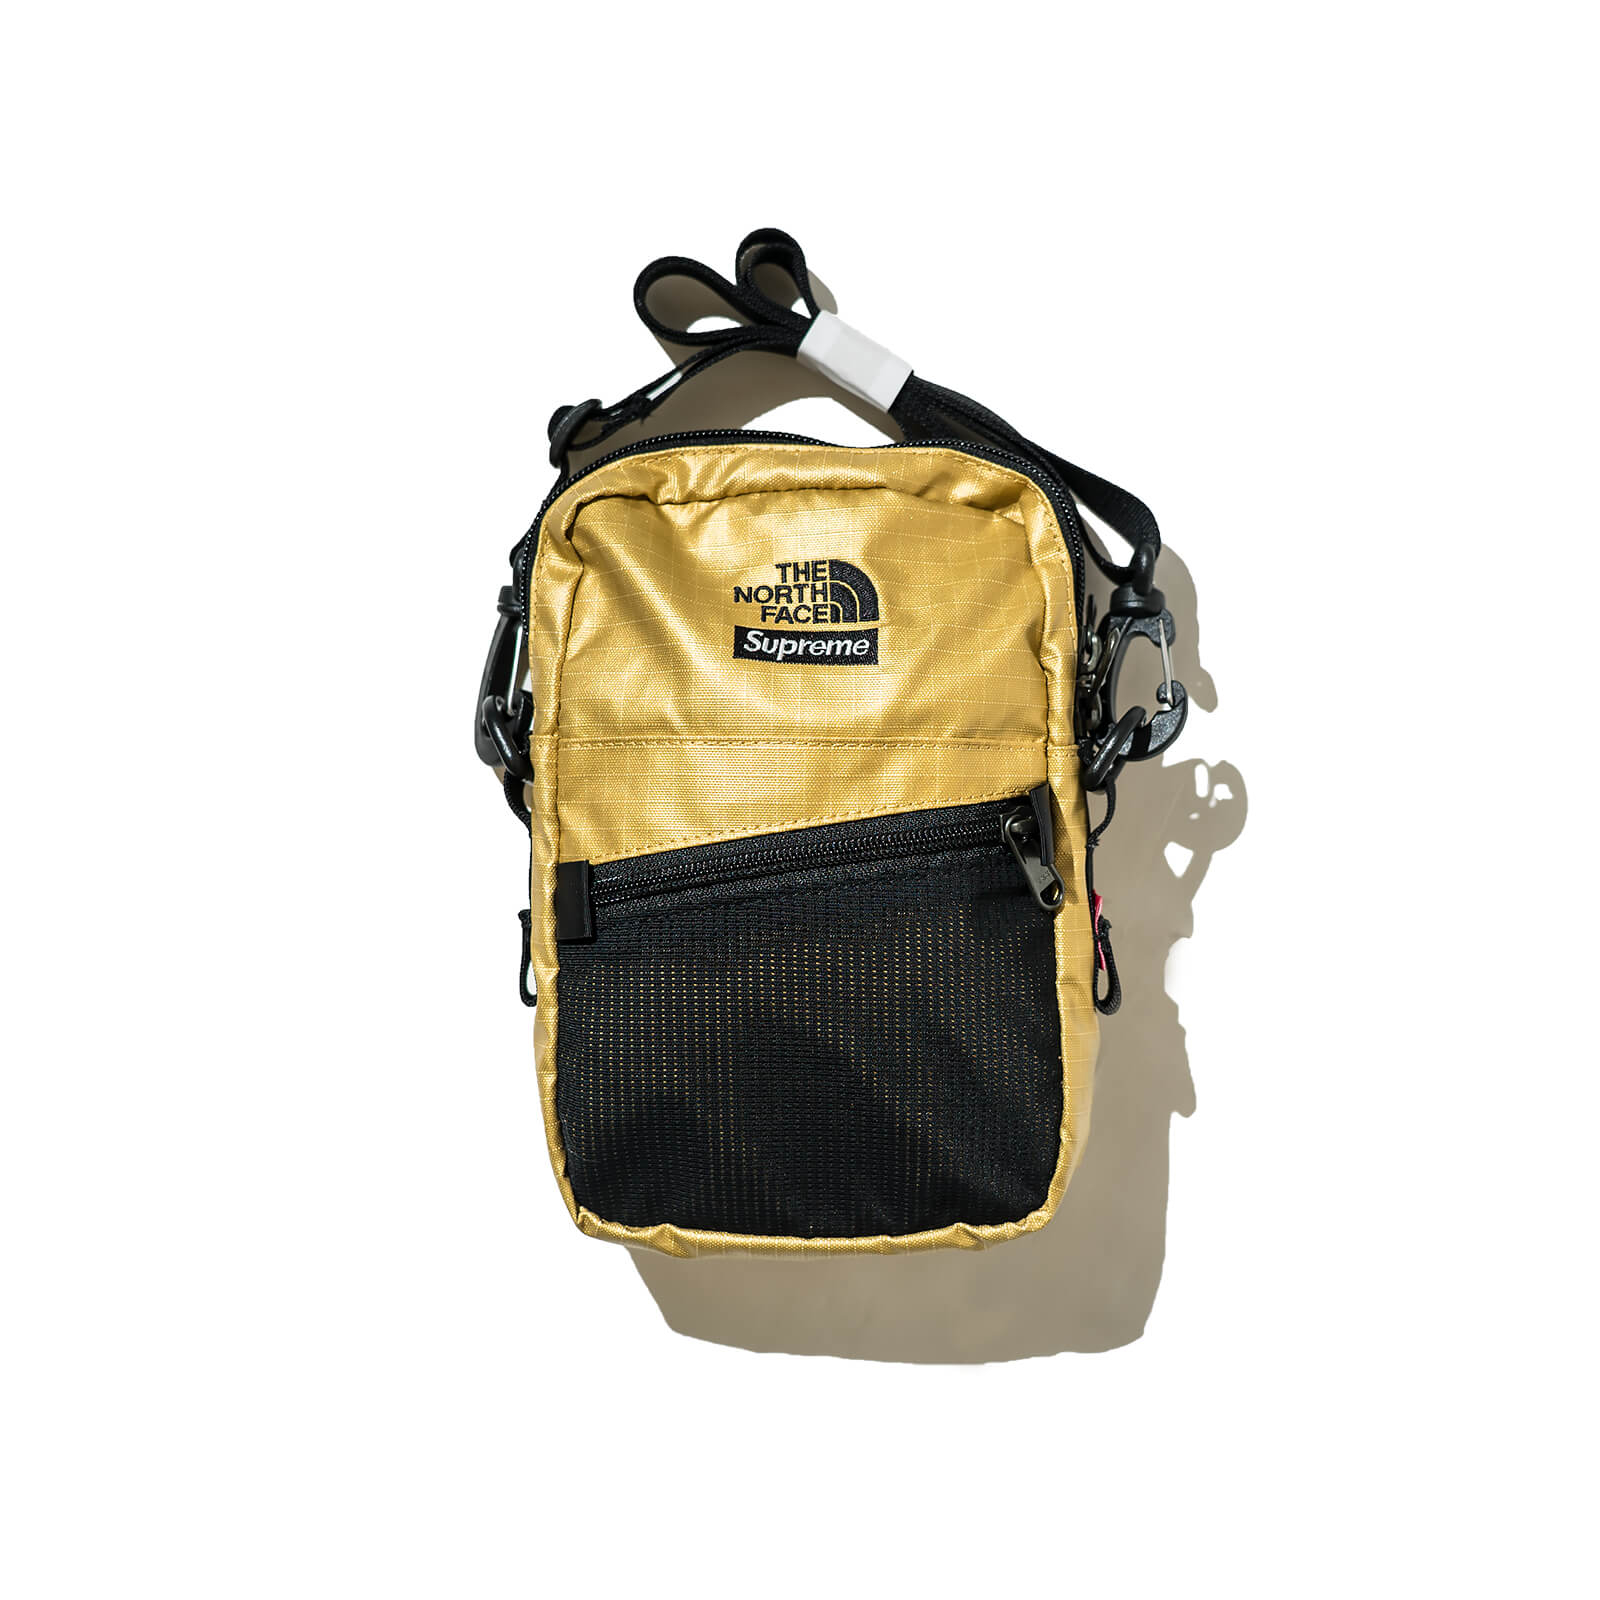 The North Face Authentic Supreme X Metallic Shoulder Bag (3 Colors)